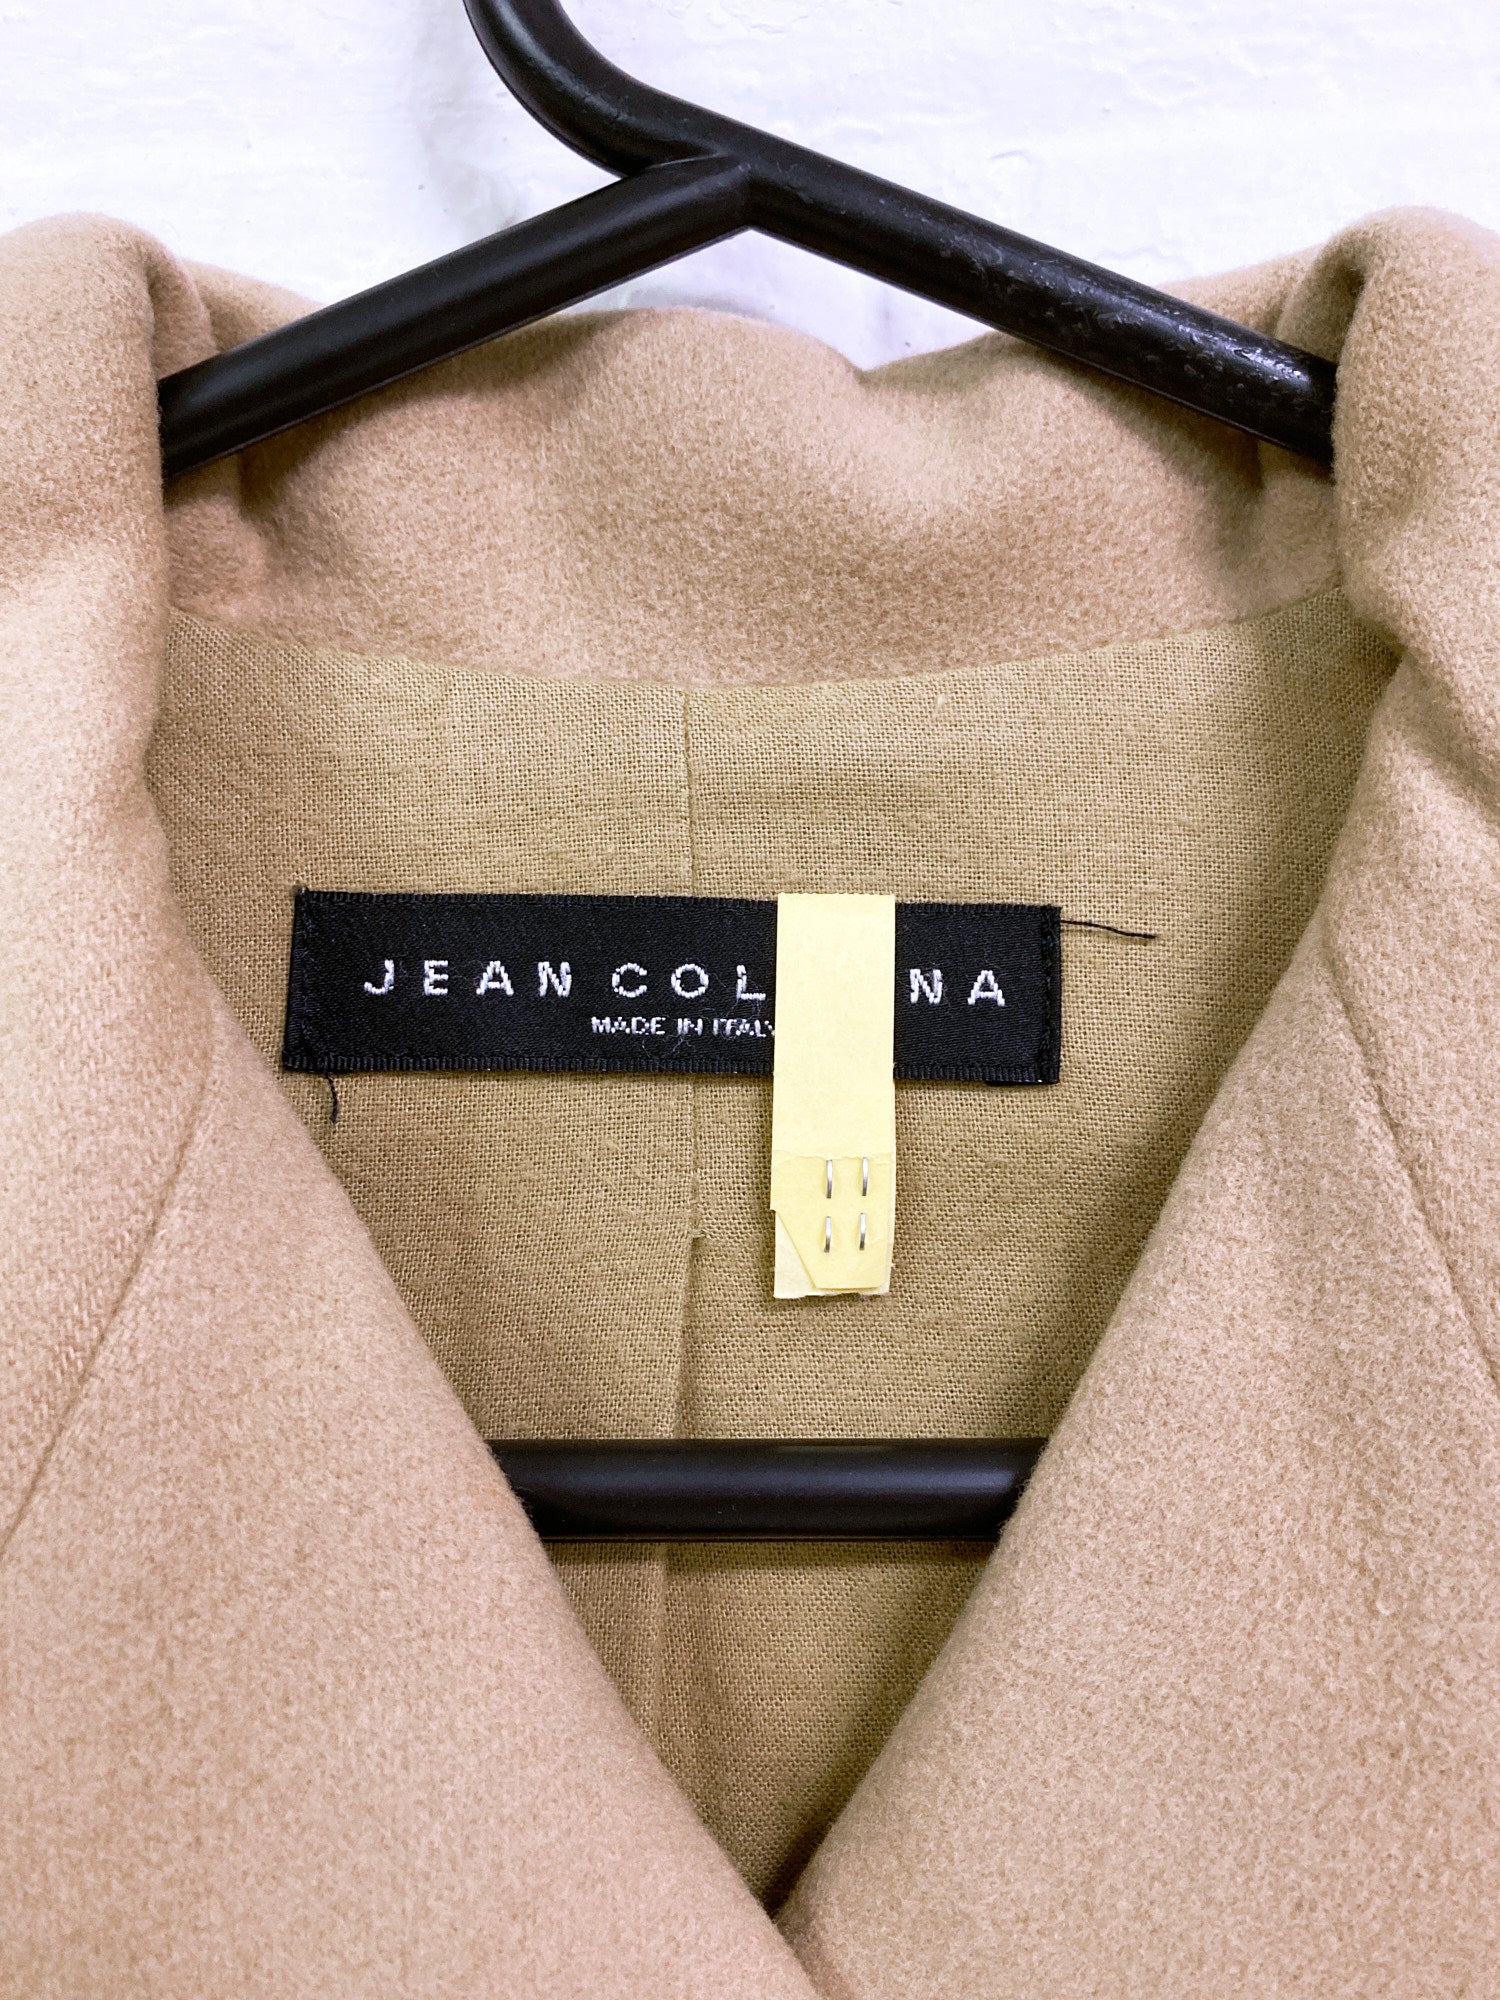 Jean Colonna camel wool melton short belted pea coat - size 38